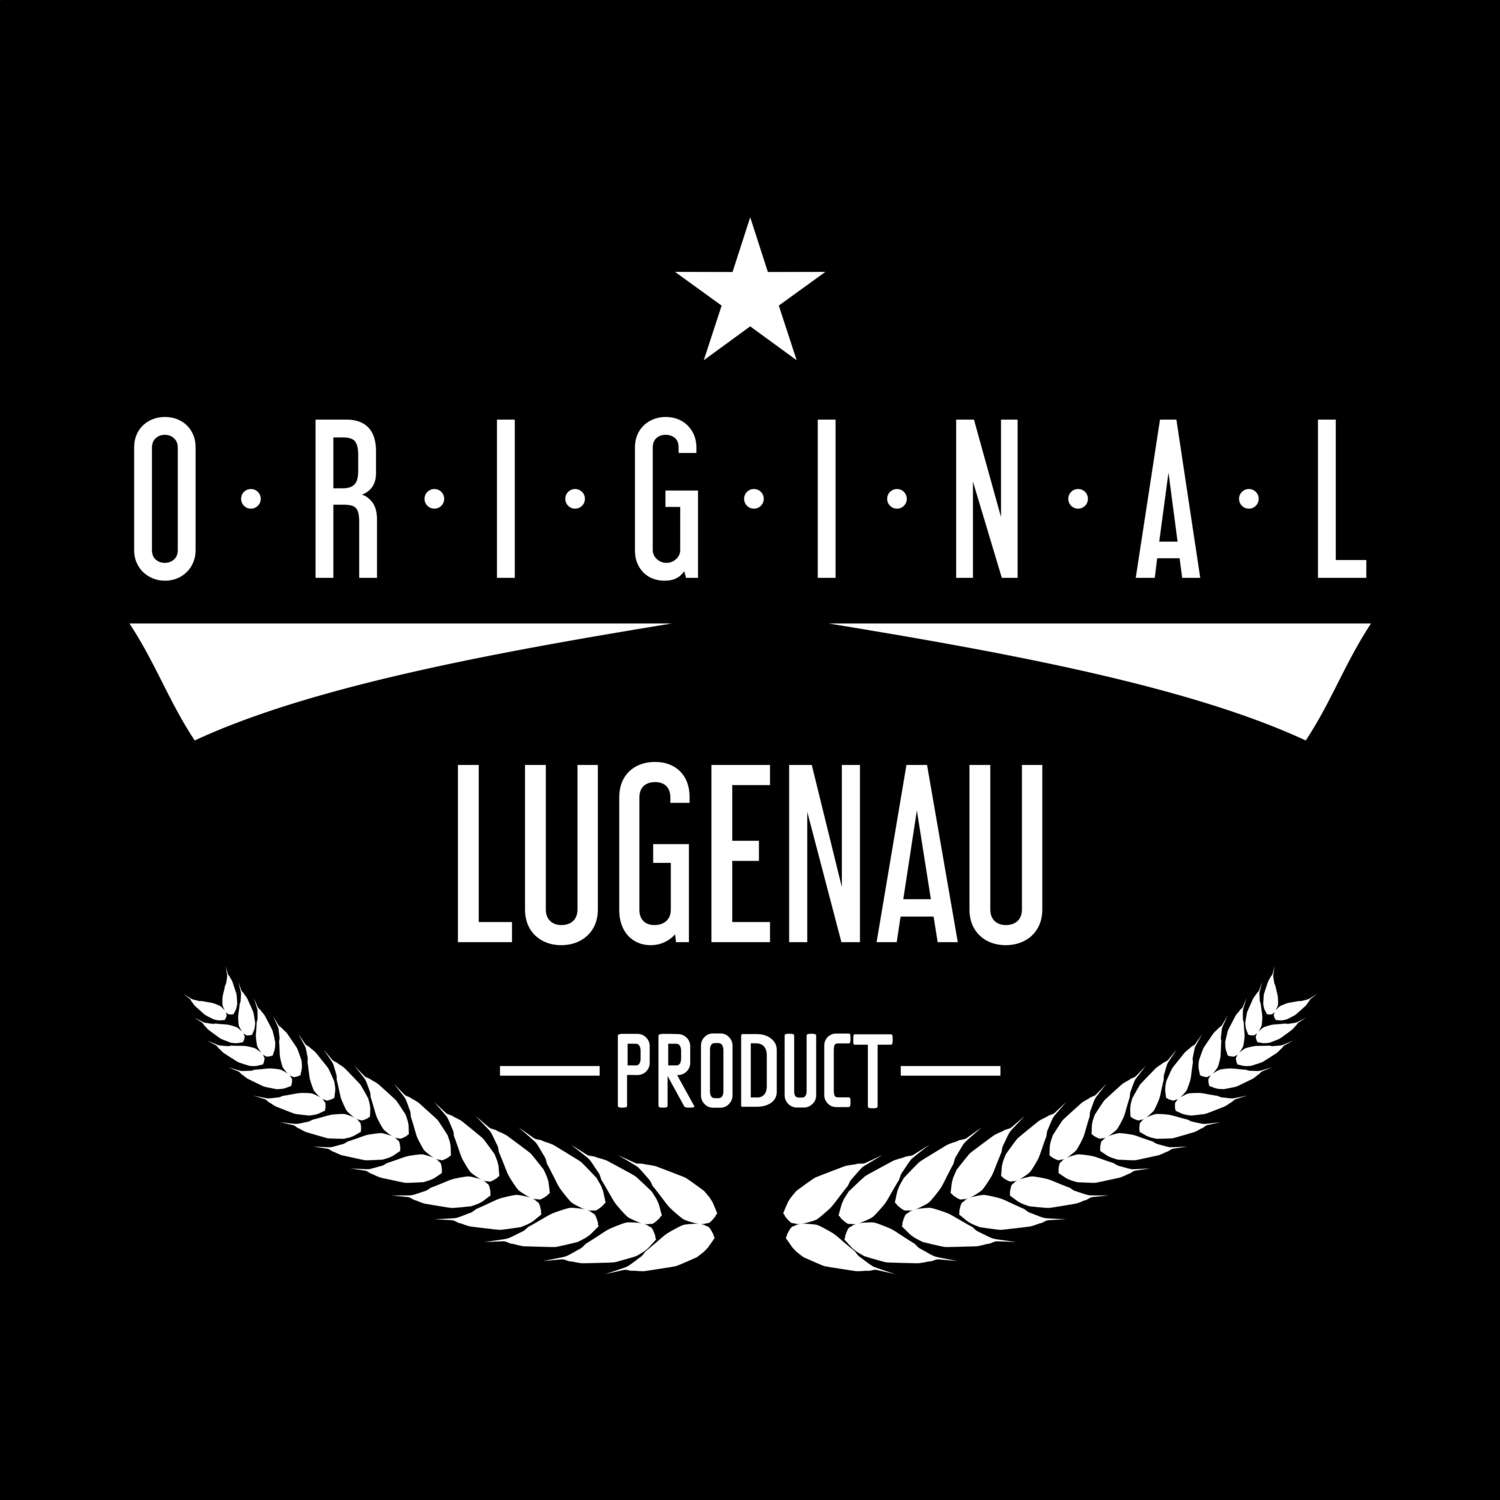 Lugenau T-Shirt »Original Product«